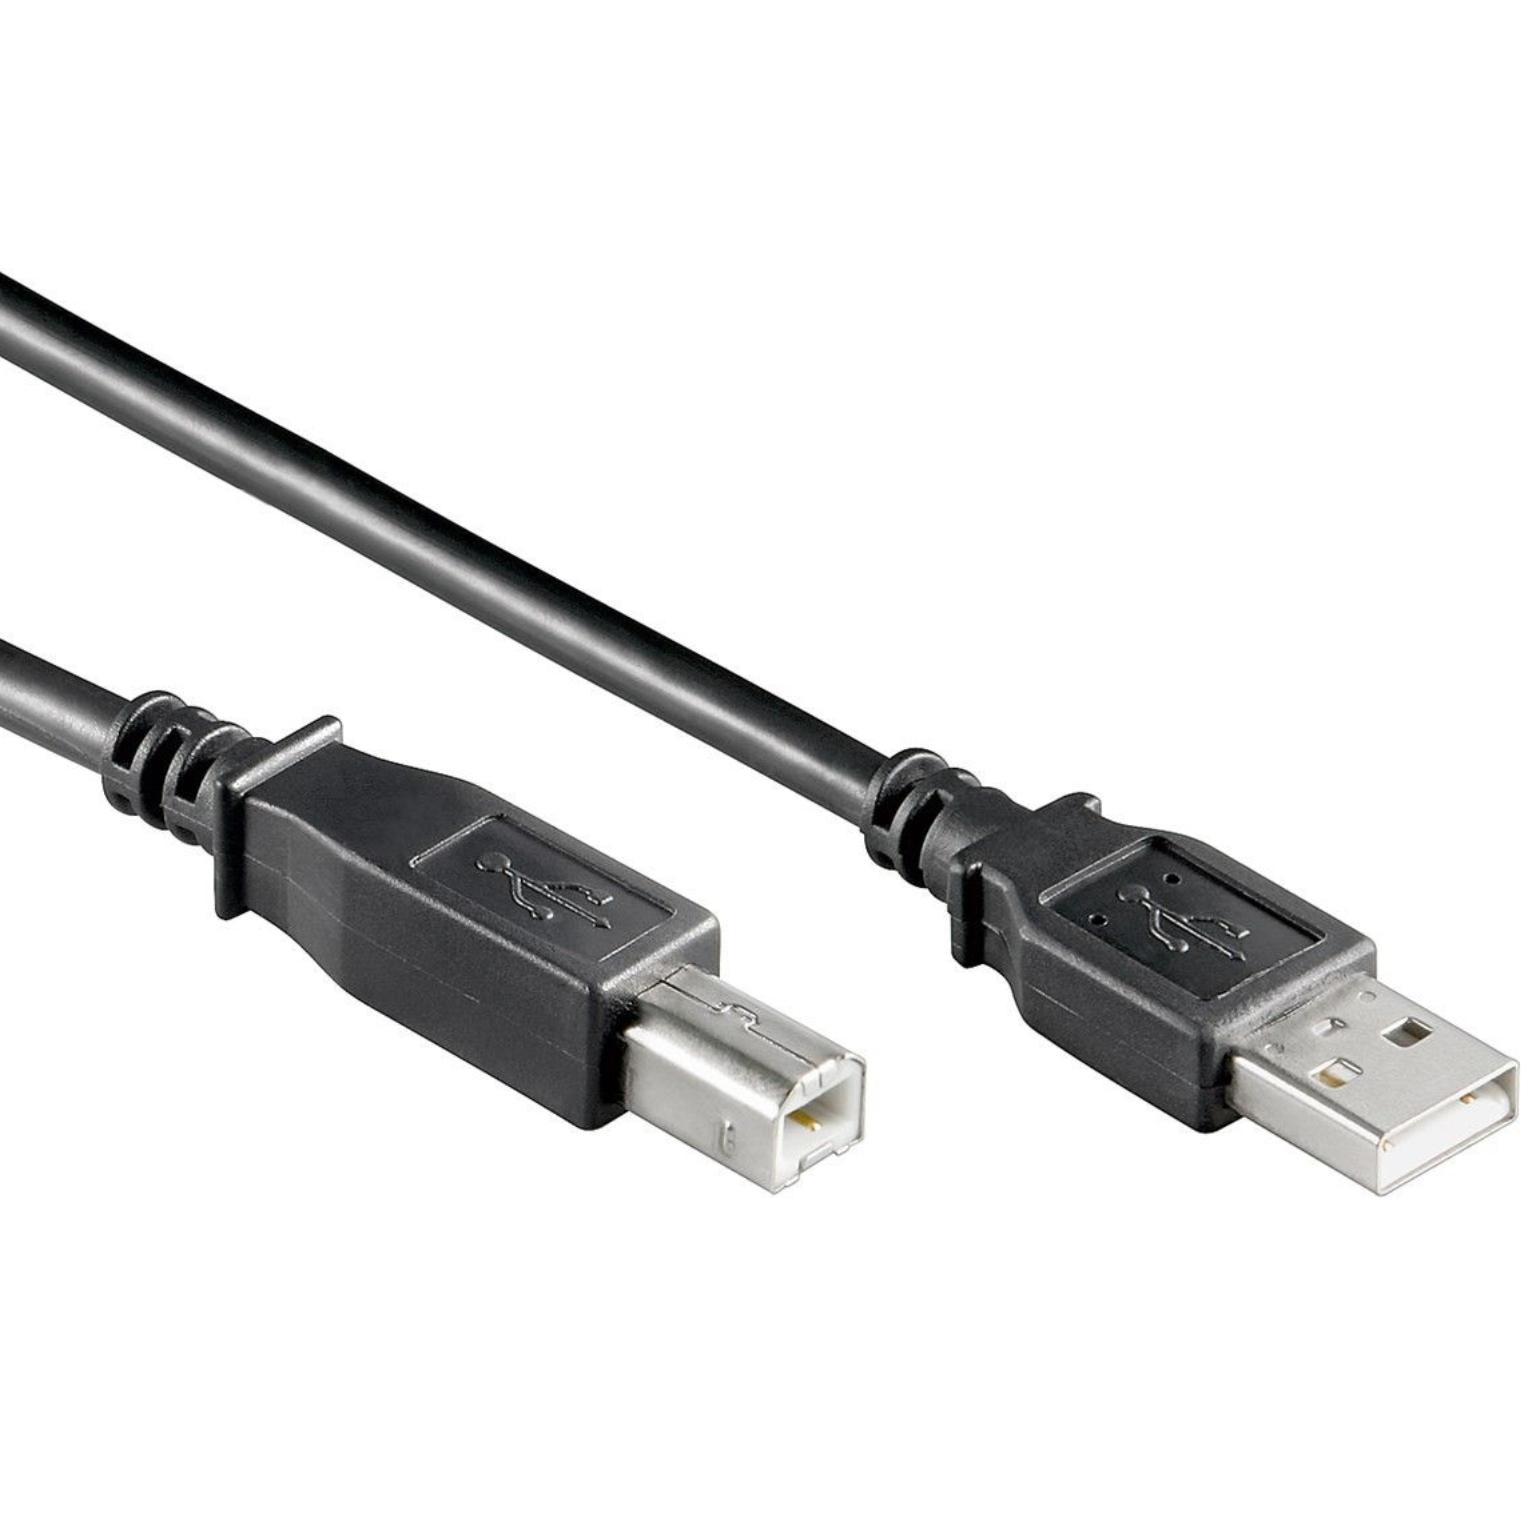 USB 2.0 kabel - Allteq